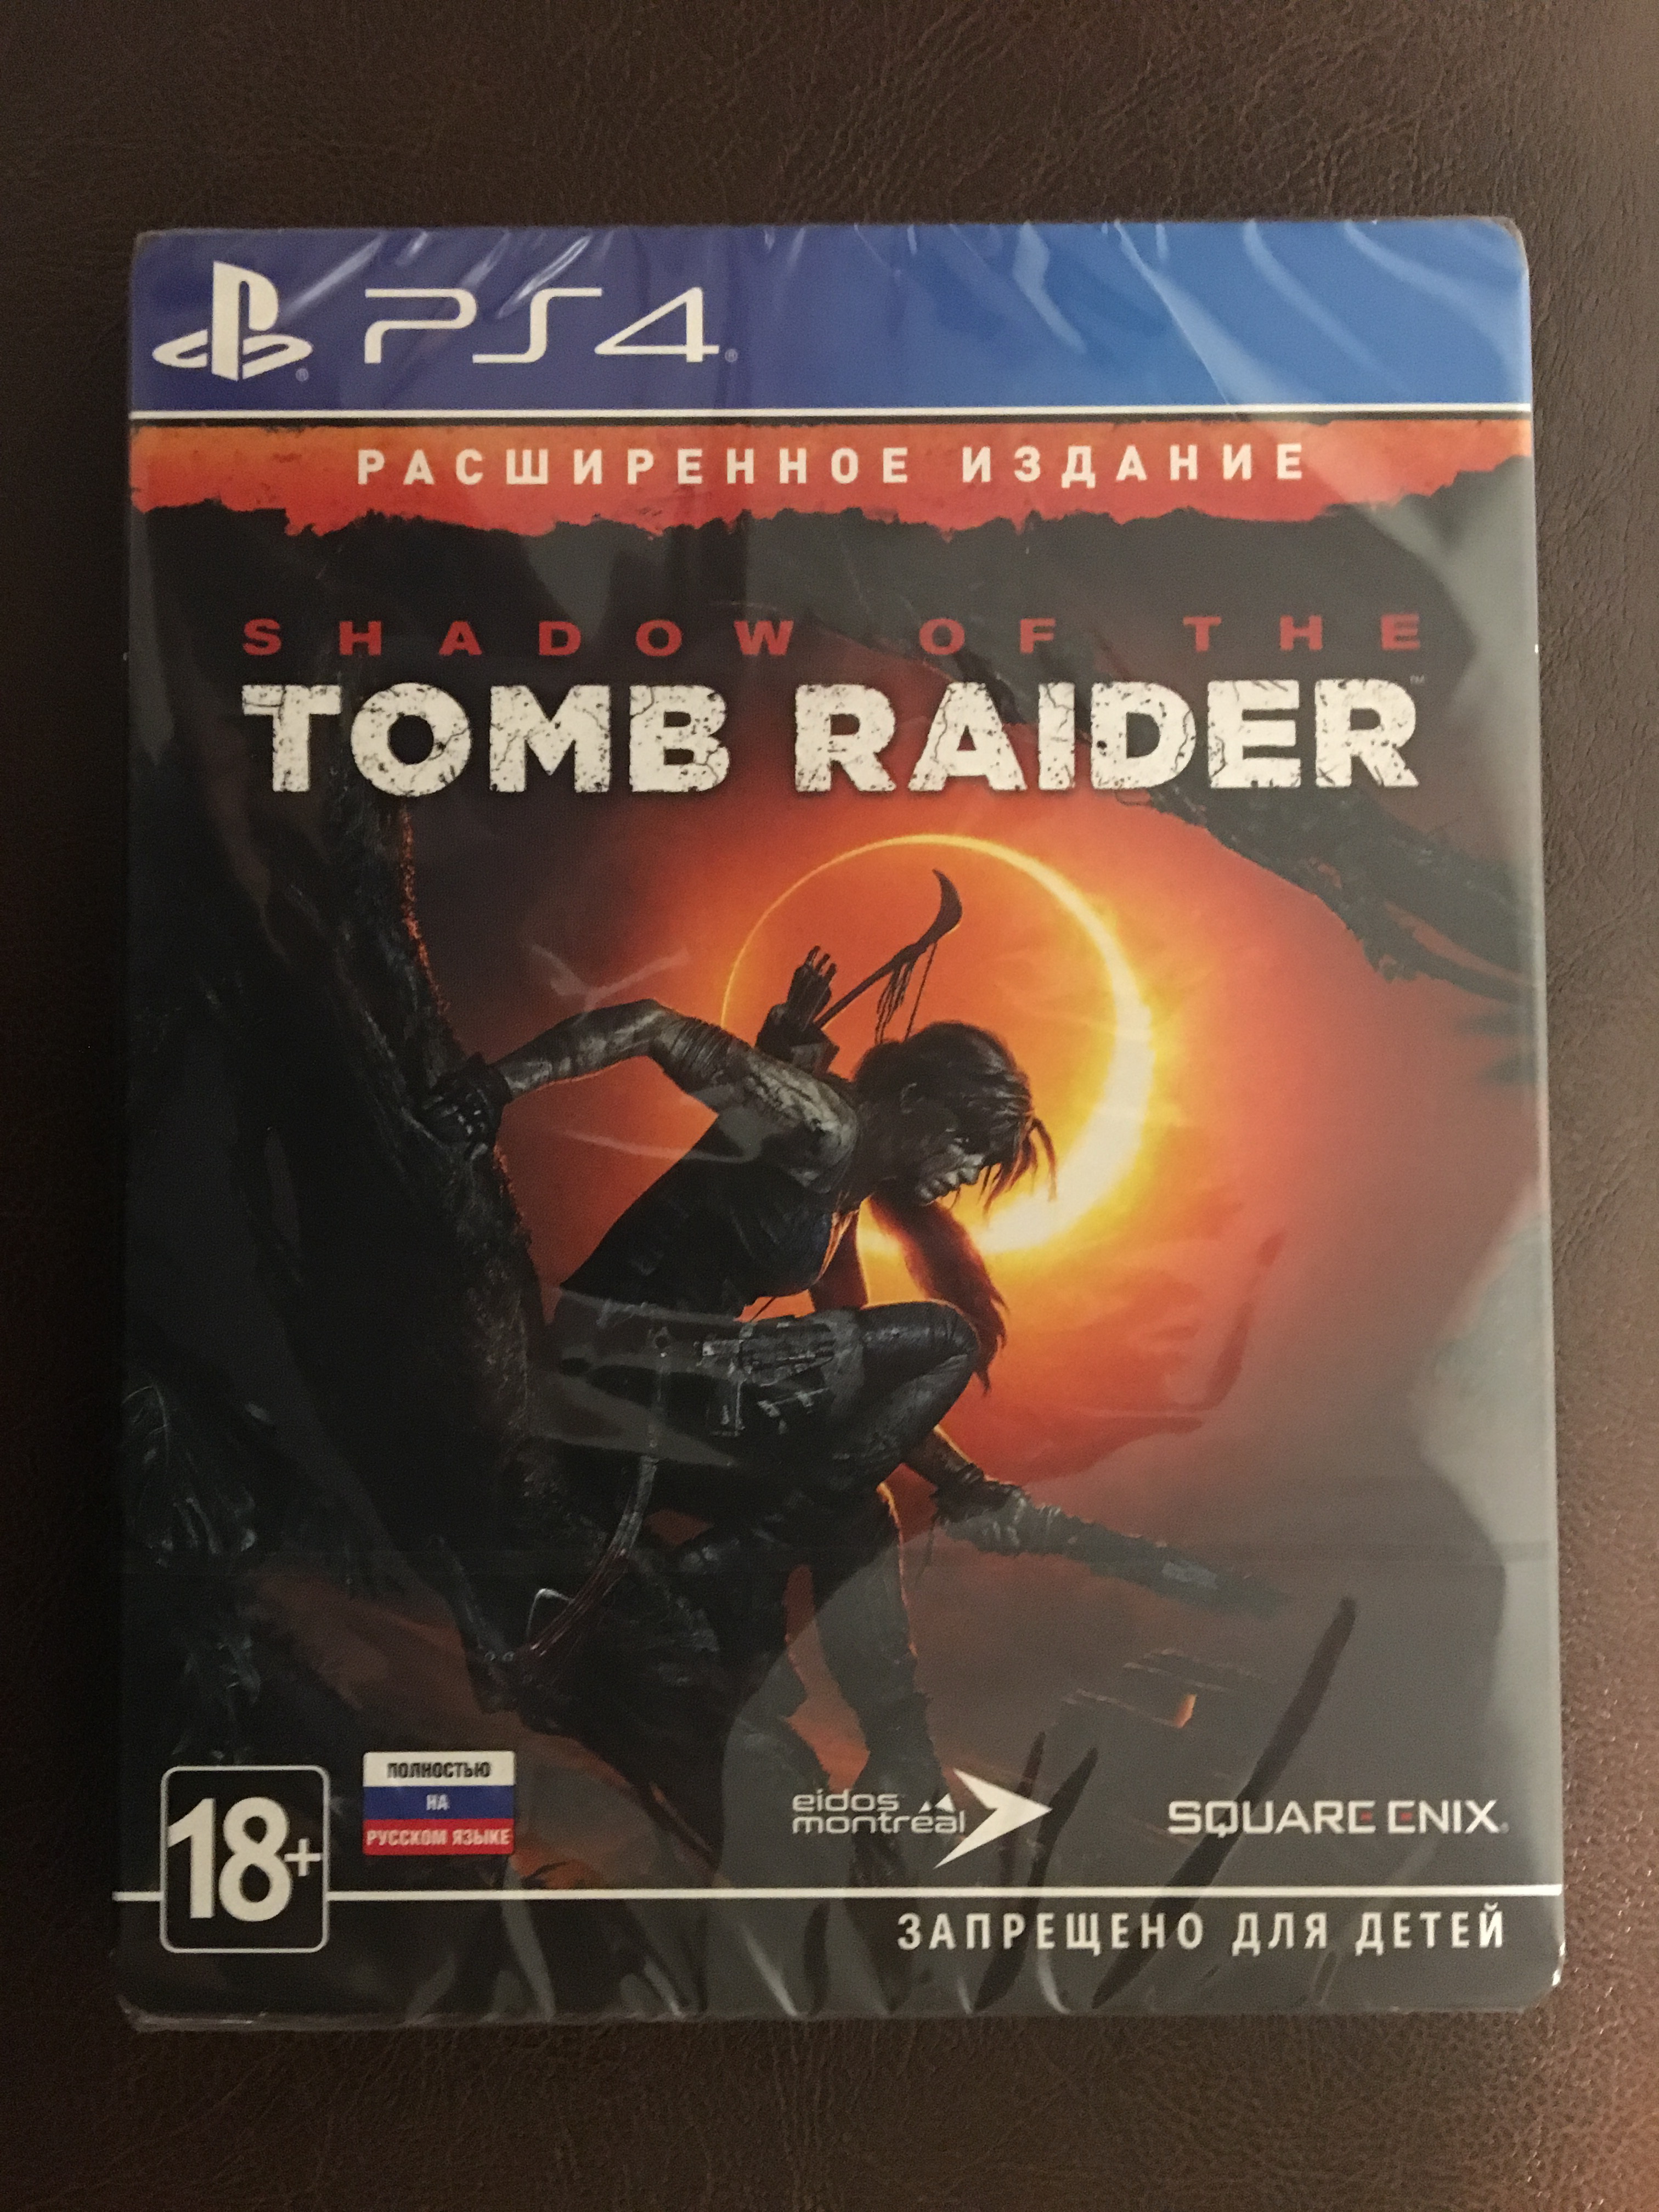 Tomb raider ps4 купить. Томб Райдер диск ПС 4. Shadow of the Tomb Raider пс4 диск. Rise of the Tomb Raider ps4 диск. Томб Райдер шэдовдиск ПС 4.